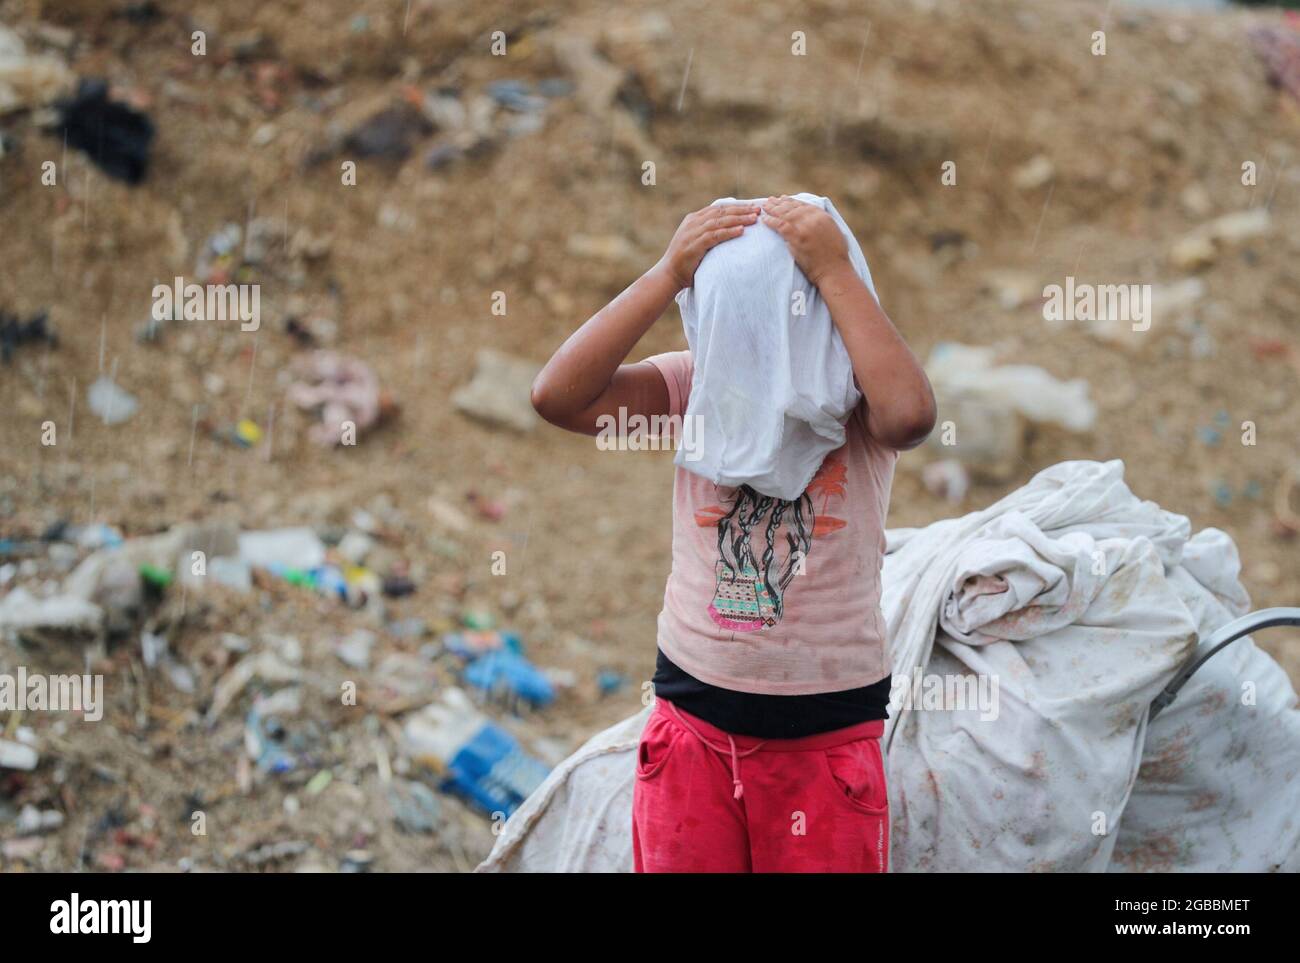 A Tunisian girl, Fatima Ghewili, 9, wears her shirt in Tunis, Tunisia July 31, 2021. Picture taken July 31, 2021. REUTERS/Ammar Awad Stock Photo